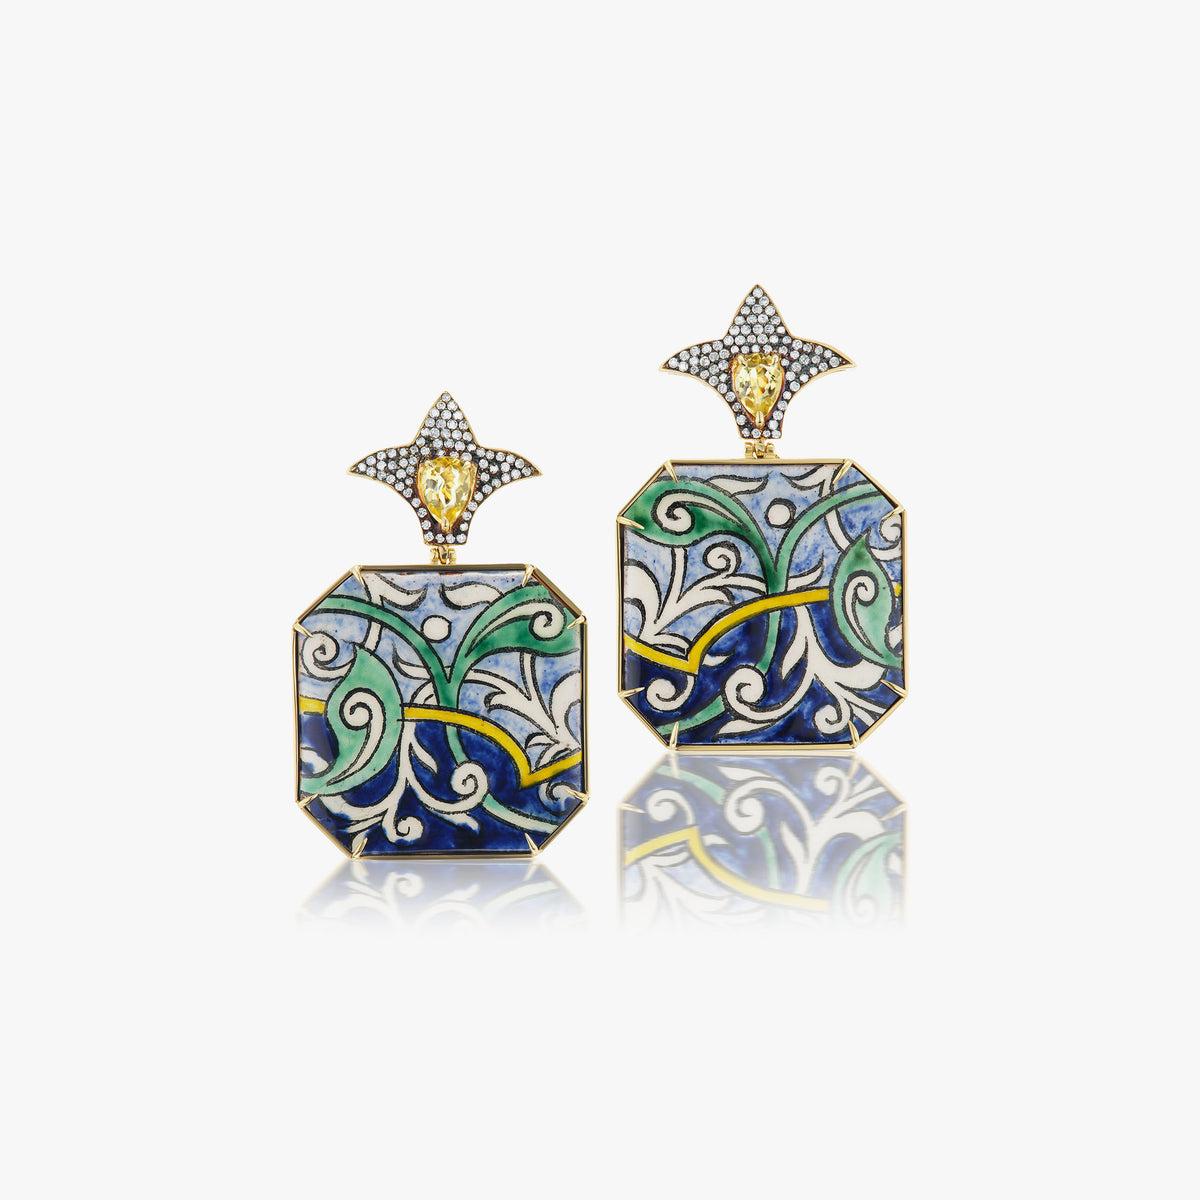 Ceramic earrings with diamond and yellow beryl